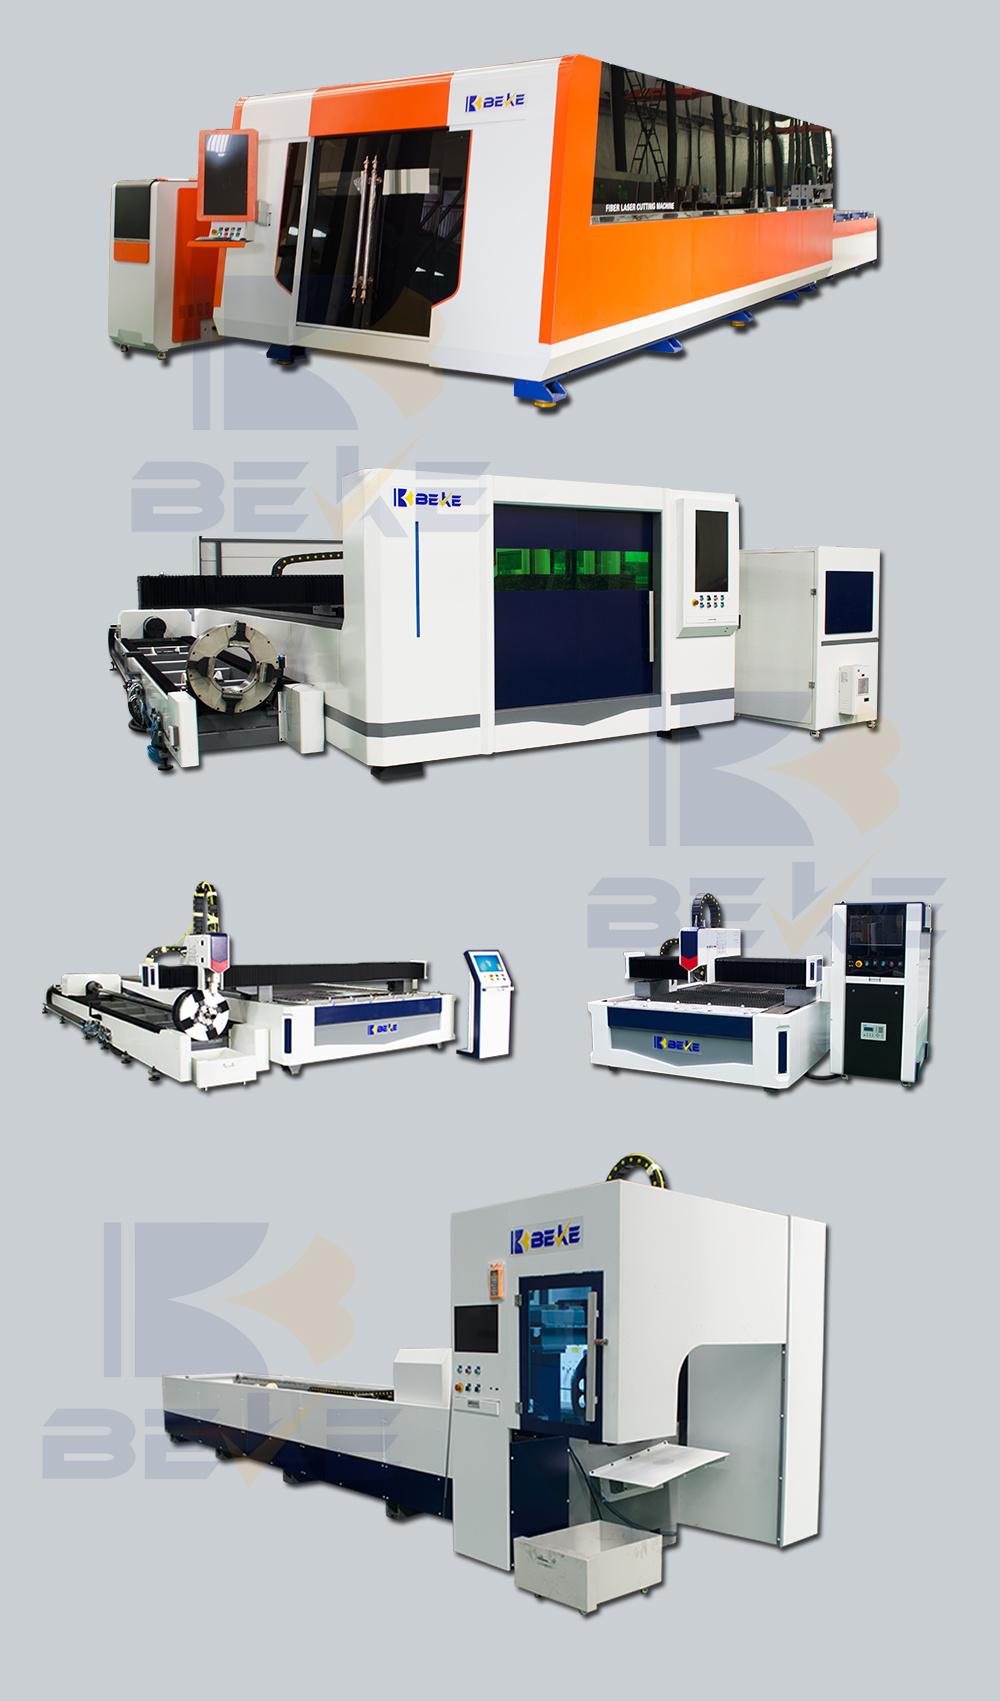 Nanjing Beke Hot Sales 6000mm Length Square Pipe Fiber Laser Cutting Machine